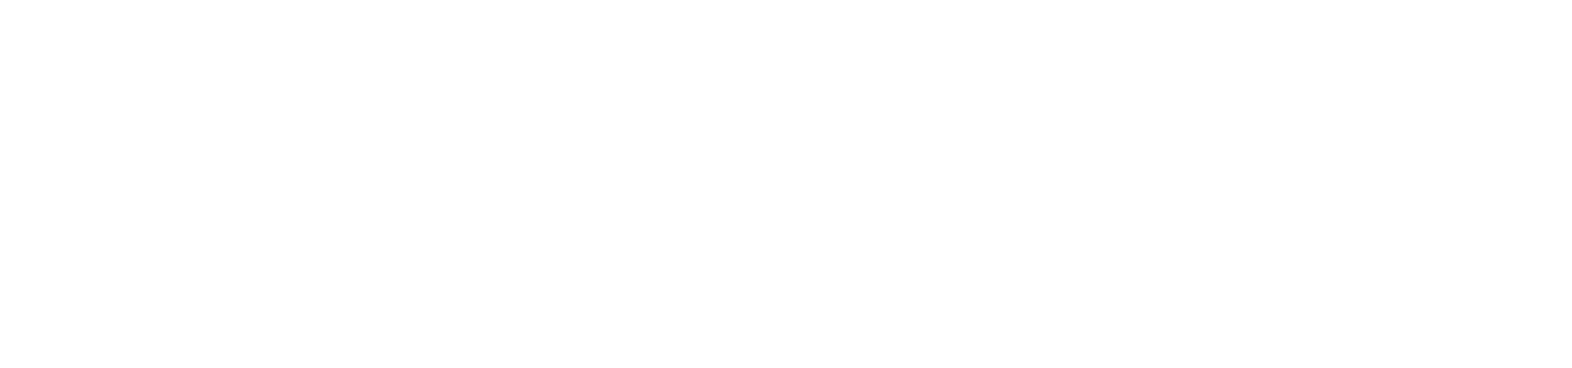 Sponsor Shellring Ale Works Logo